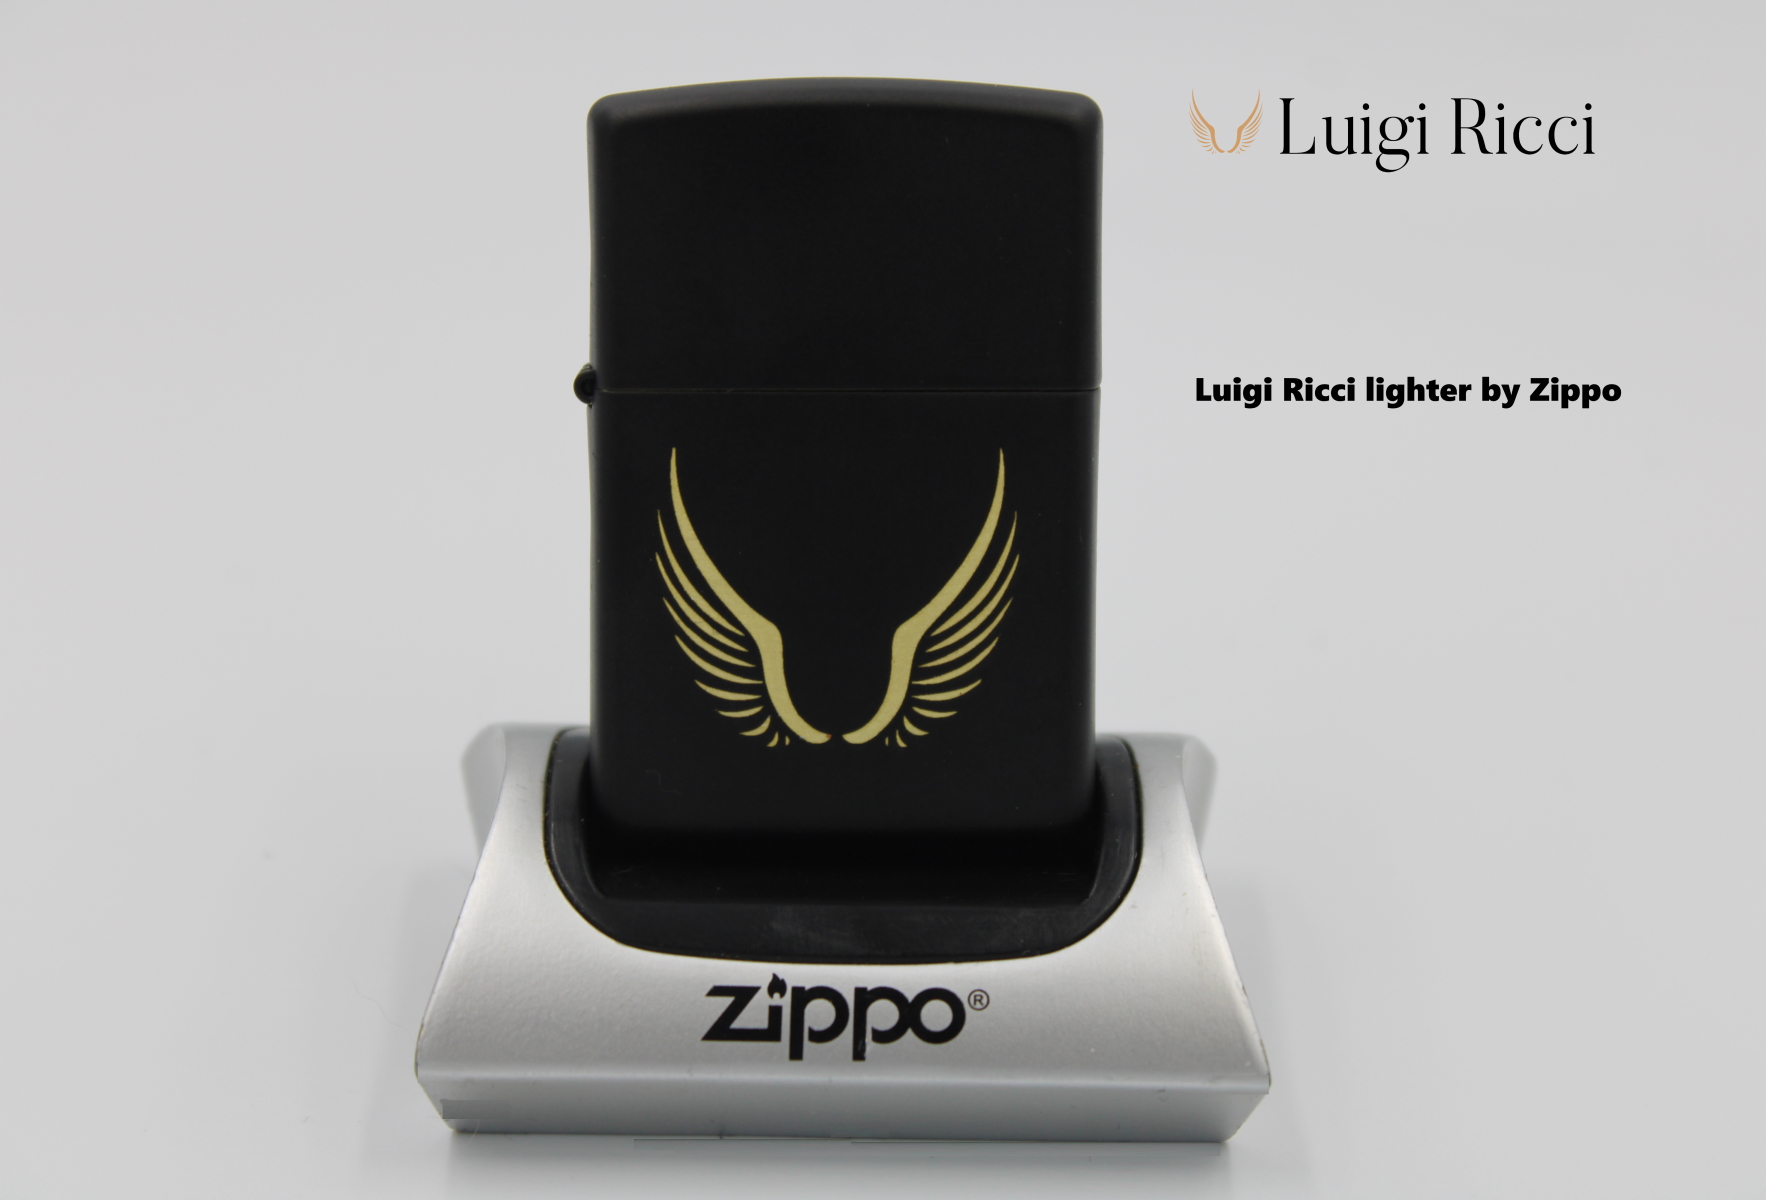 Luigi Ricci quality lighter by Zippo